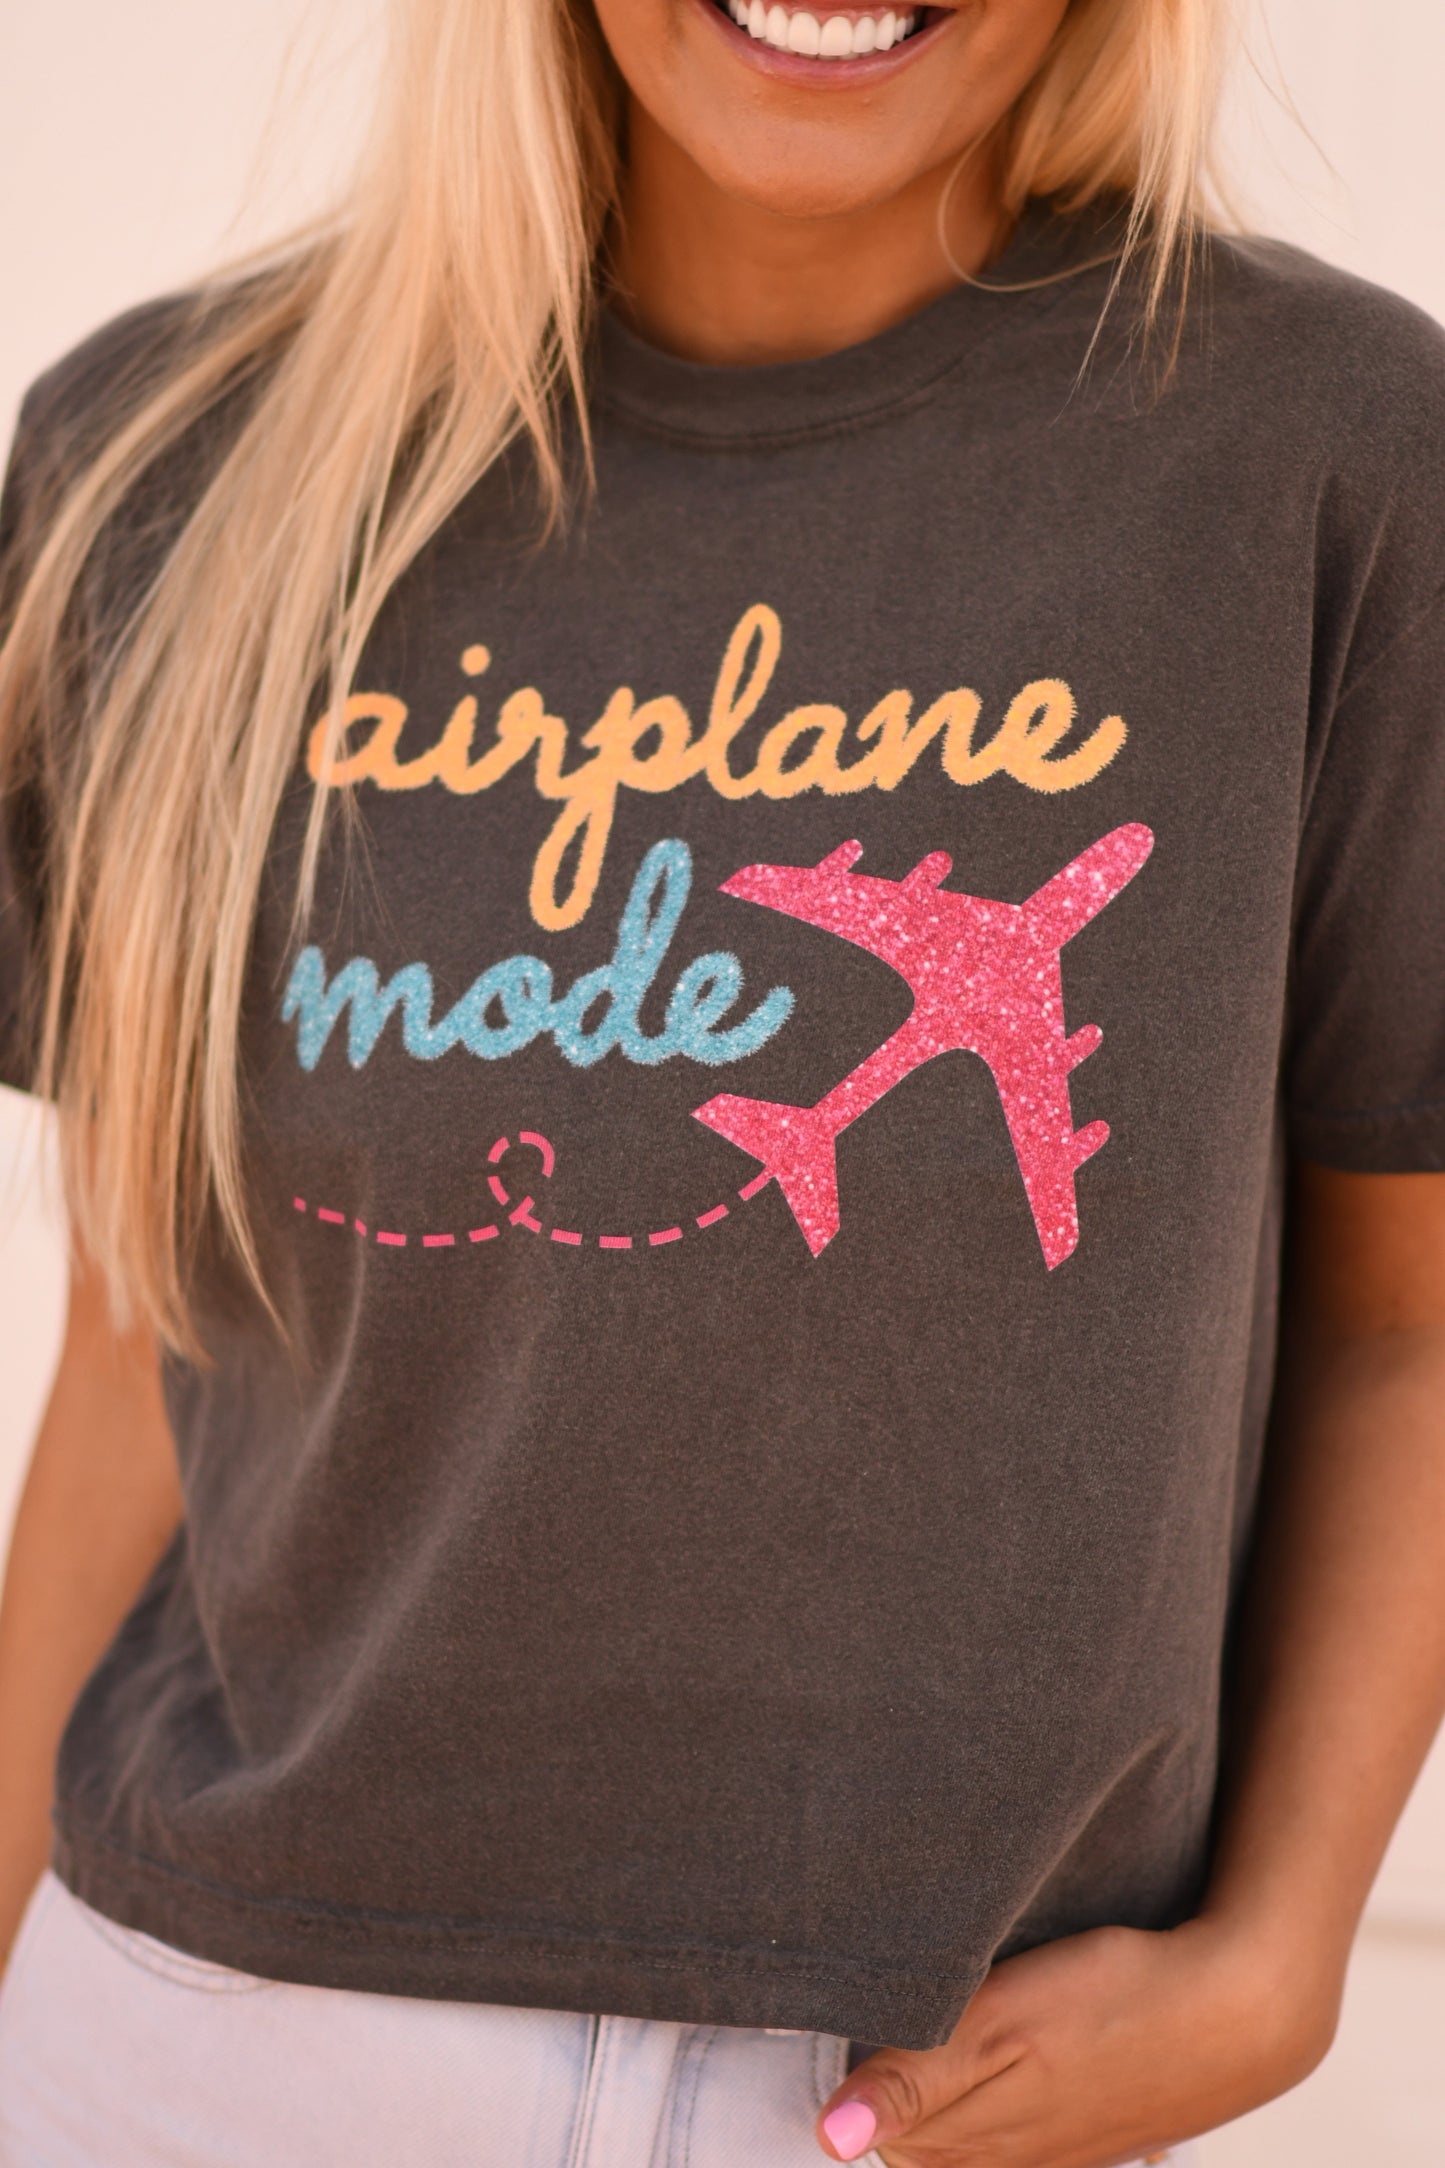 Airplane mode tee